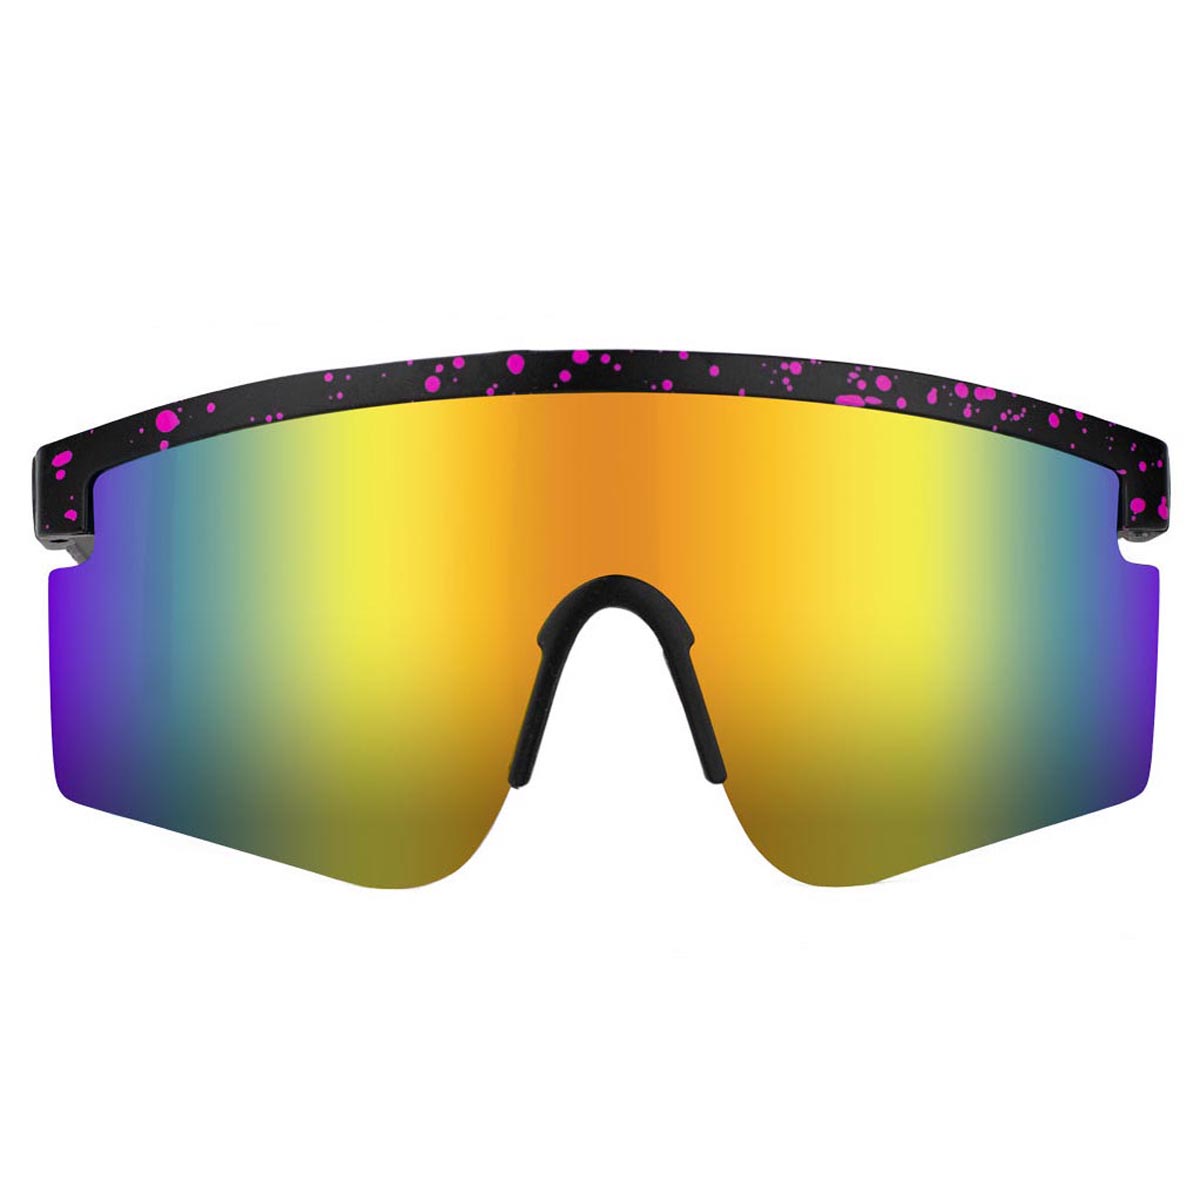 Glassy Mojave Polarized Sunglasses - Black/Yellow Mirror image 2